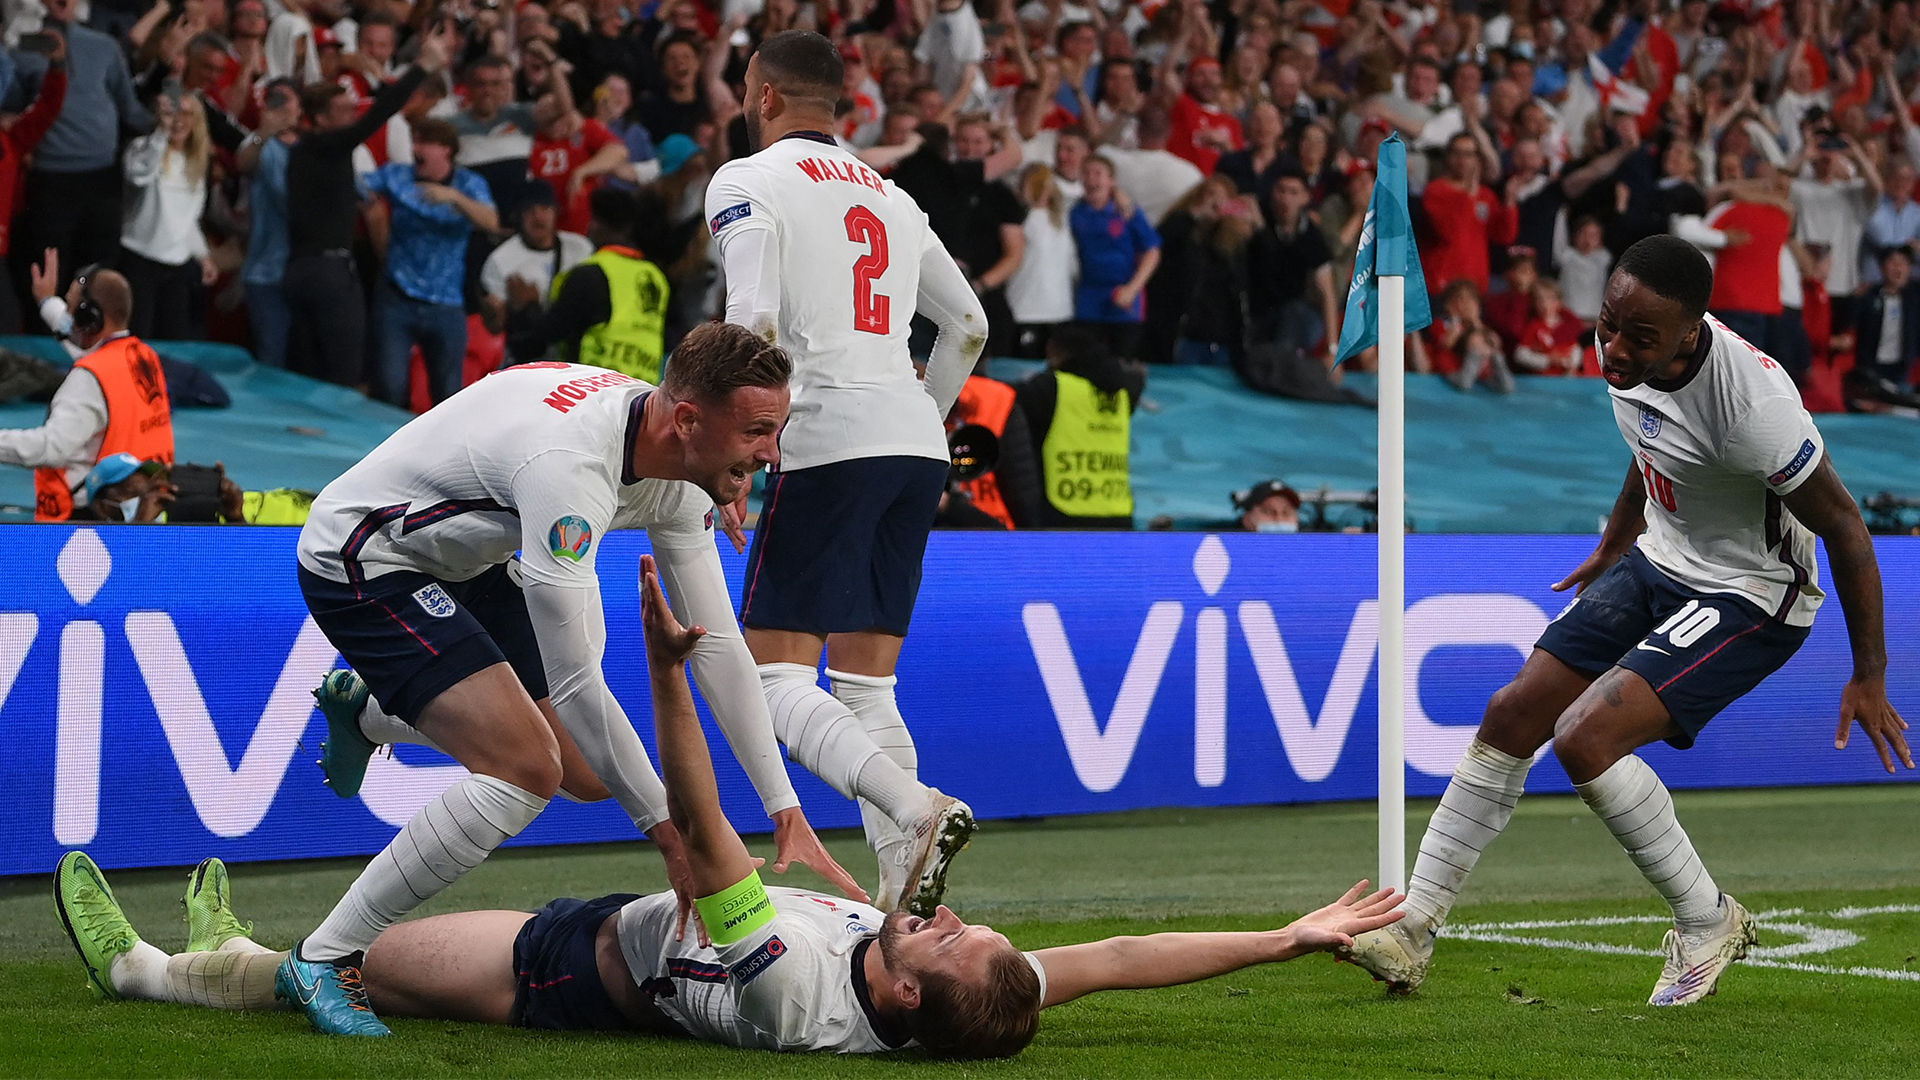 Англия 2. Россия-Англия 2-1. Футболист сборной Дании Дамсгард. Англия вышла в финал евро празднование. Англия разгромила Кенинберг.